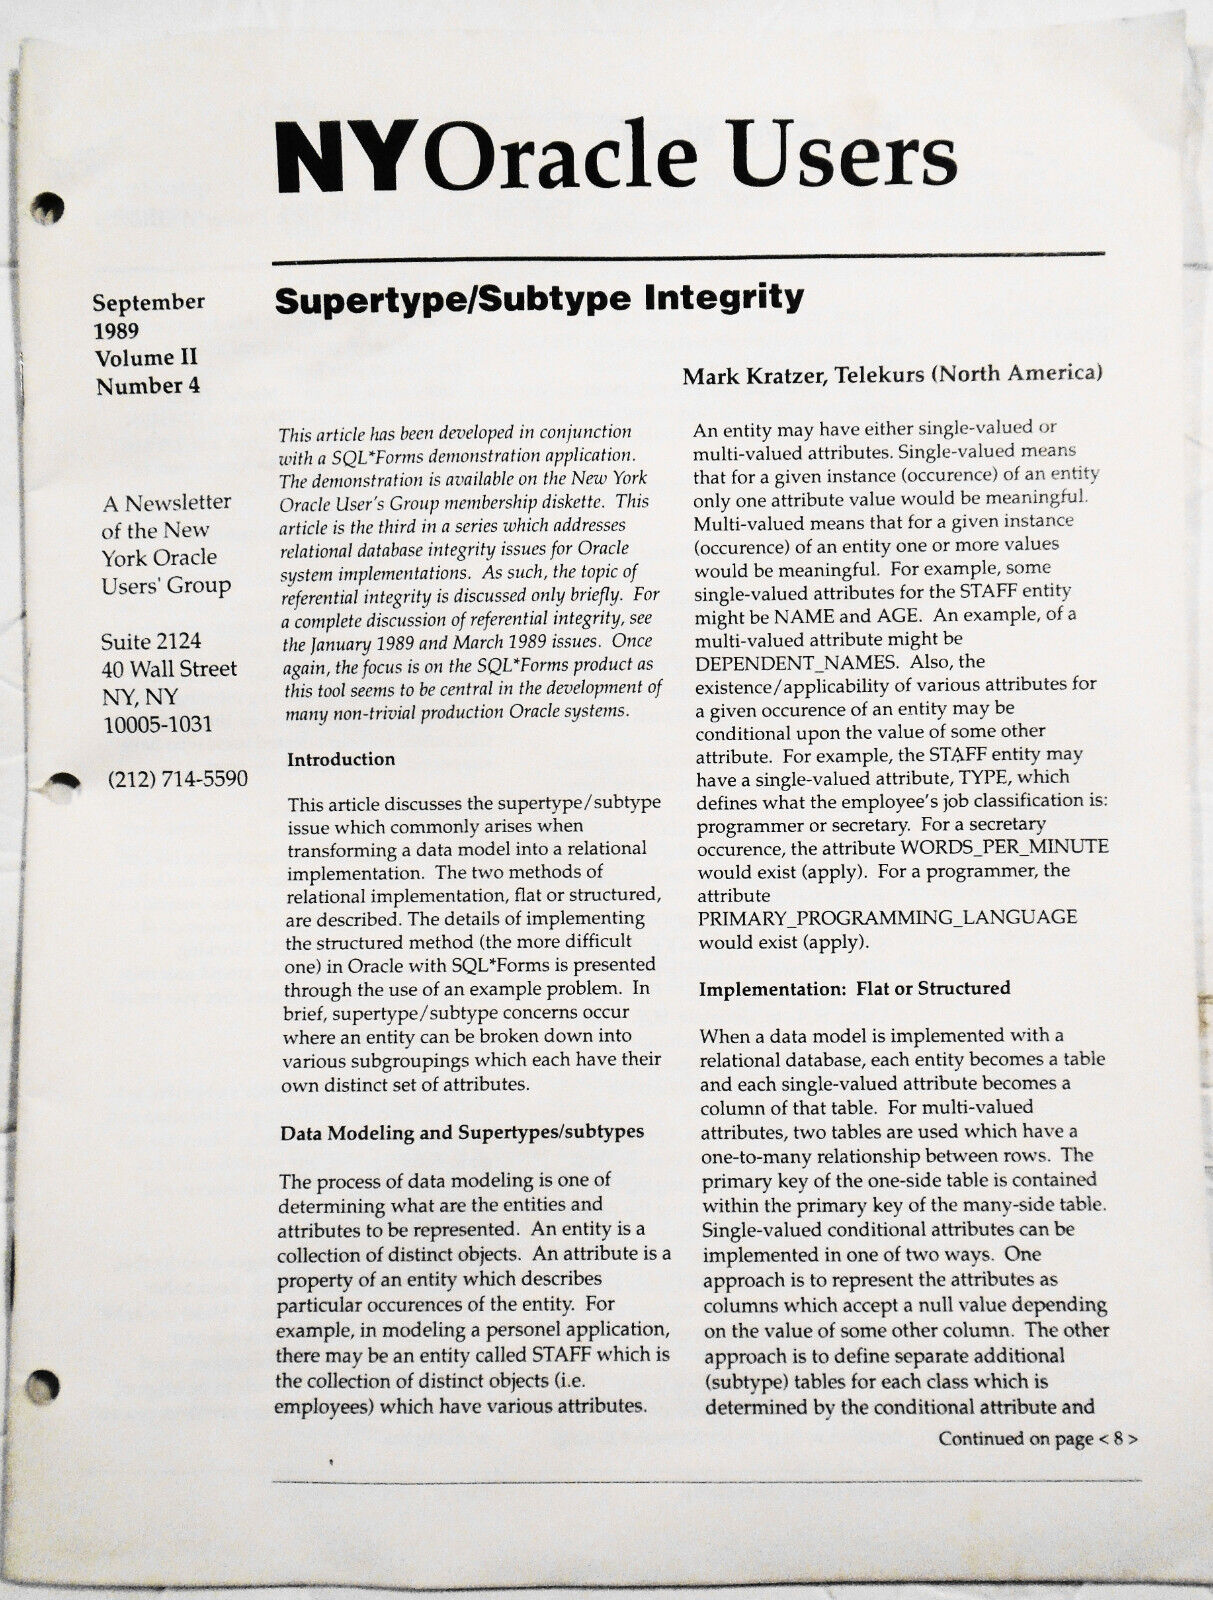 New York Oracle Users Group Newsletter, September 1989. Volume II, Number 4.